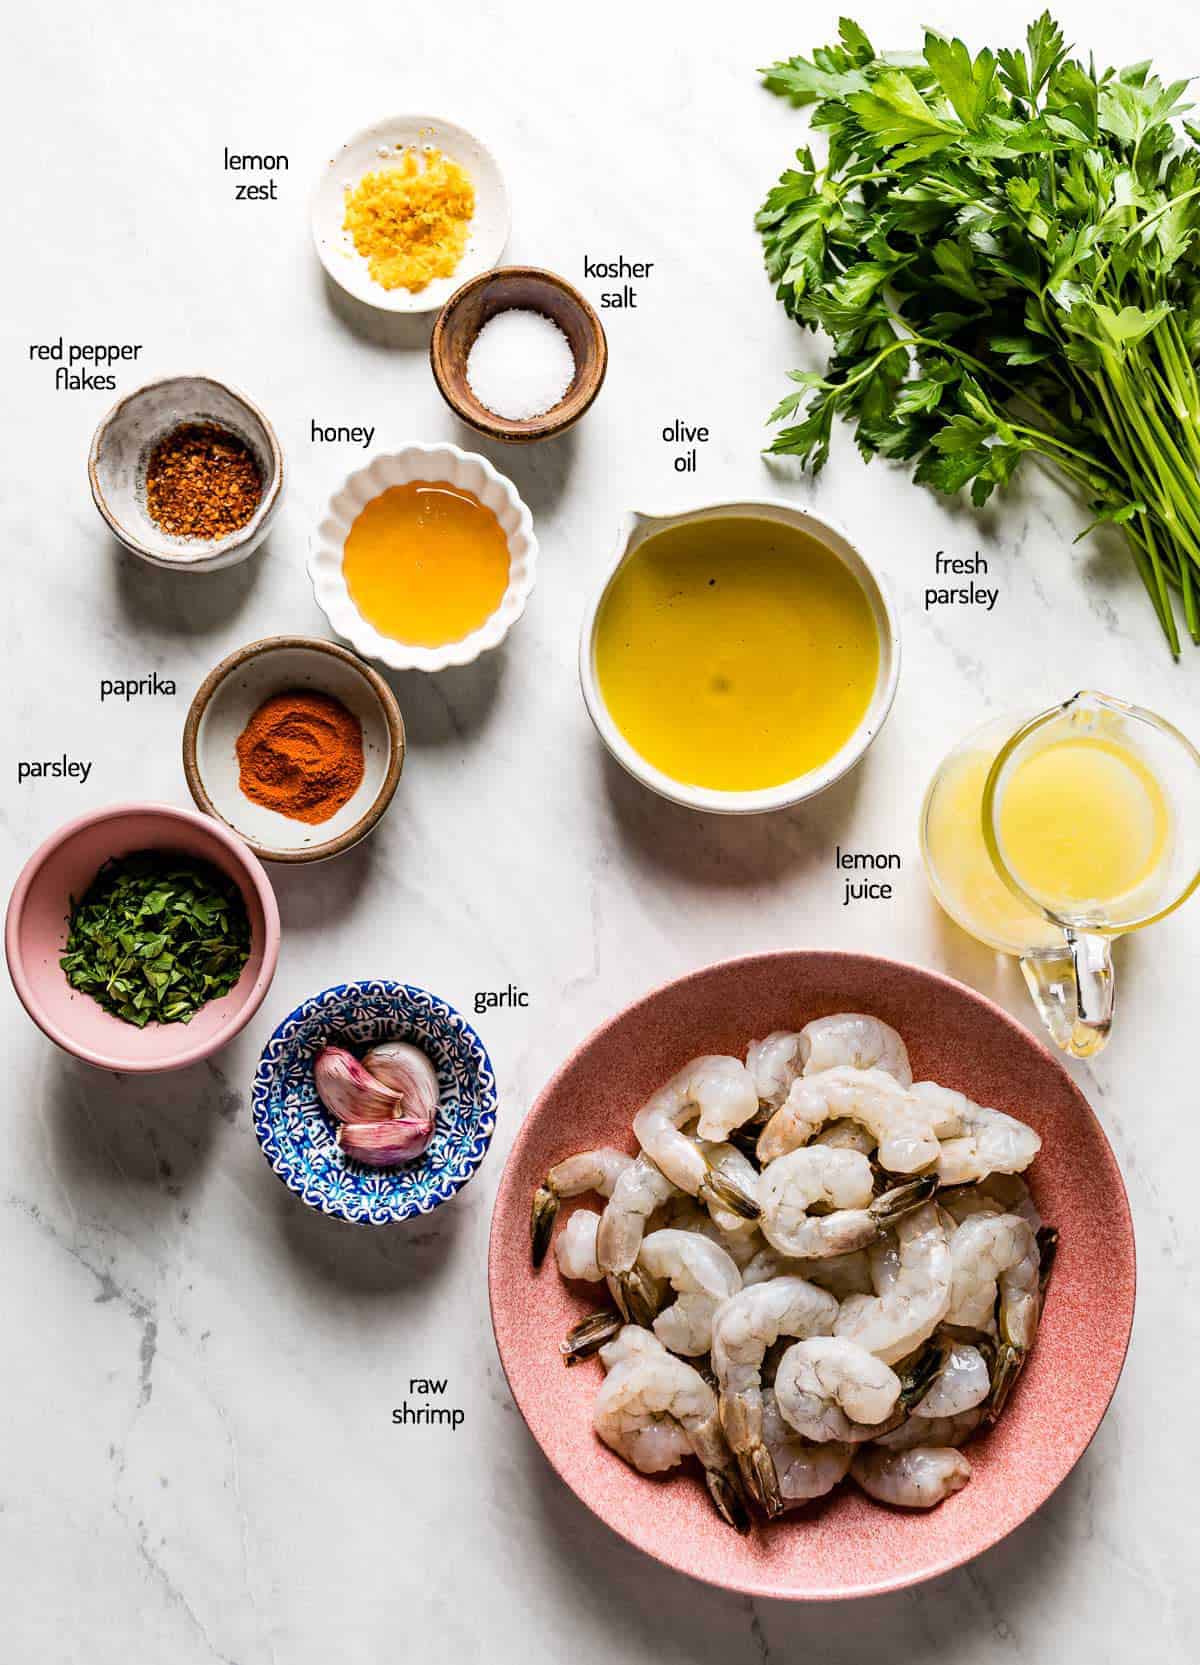 Shrimp marinade ingredients